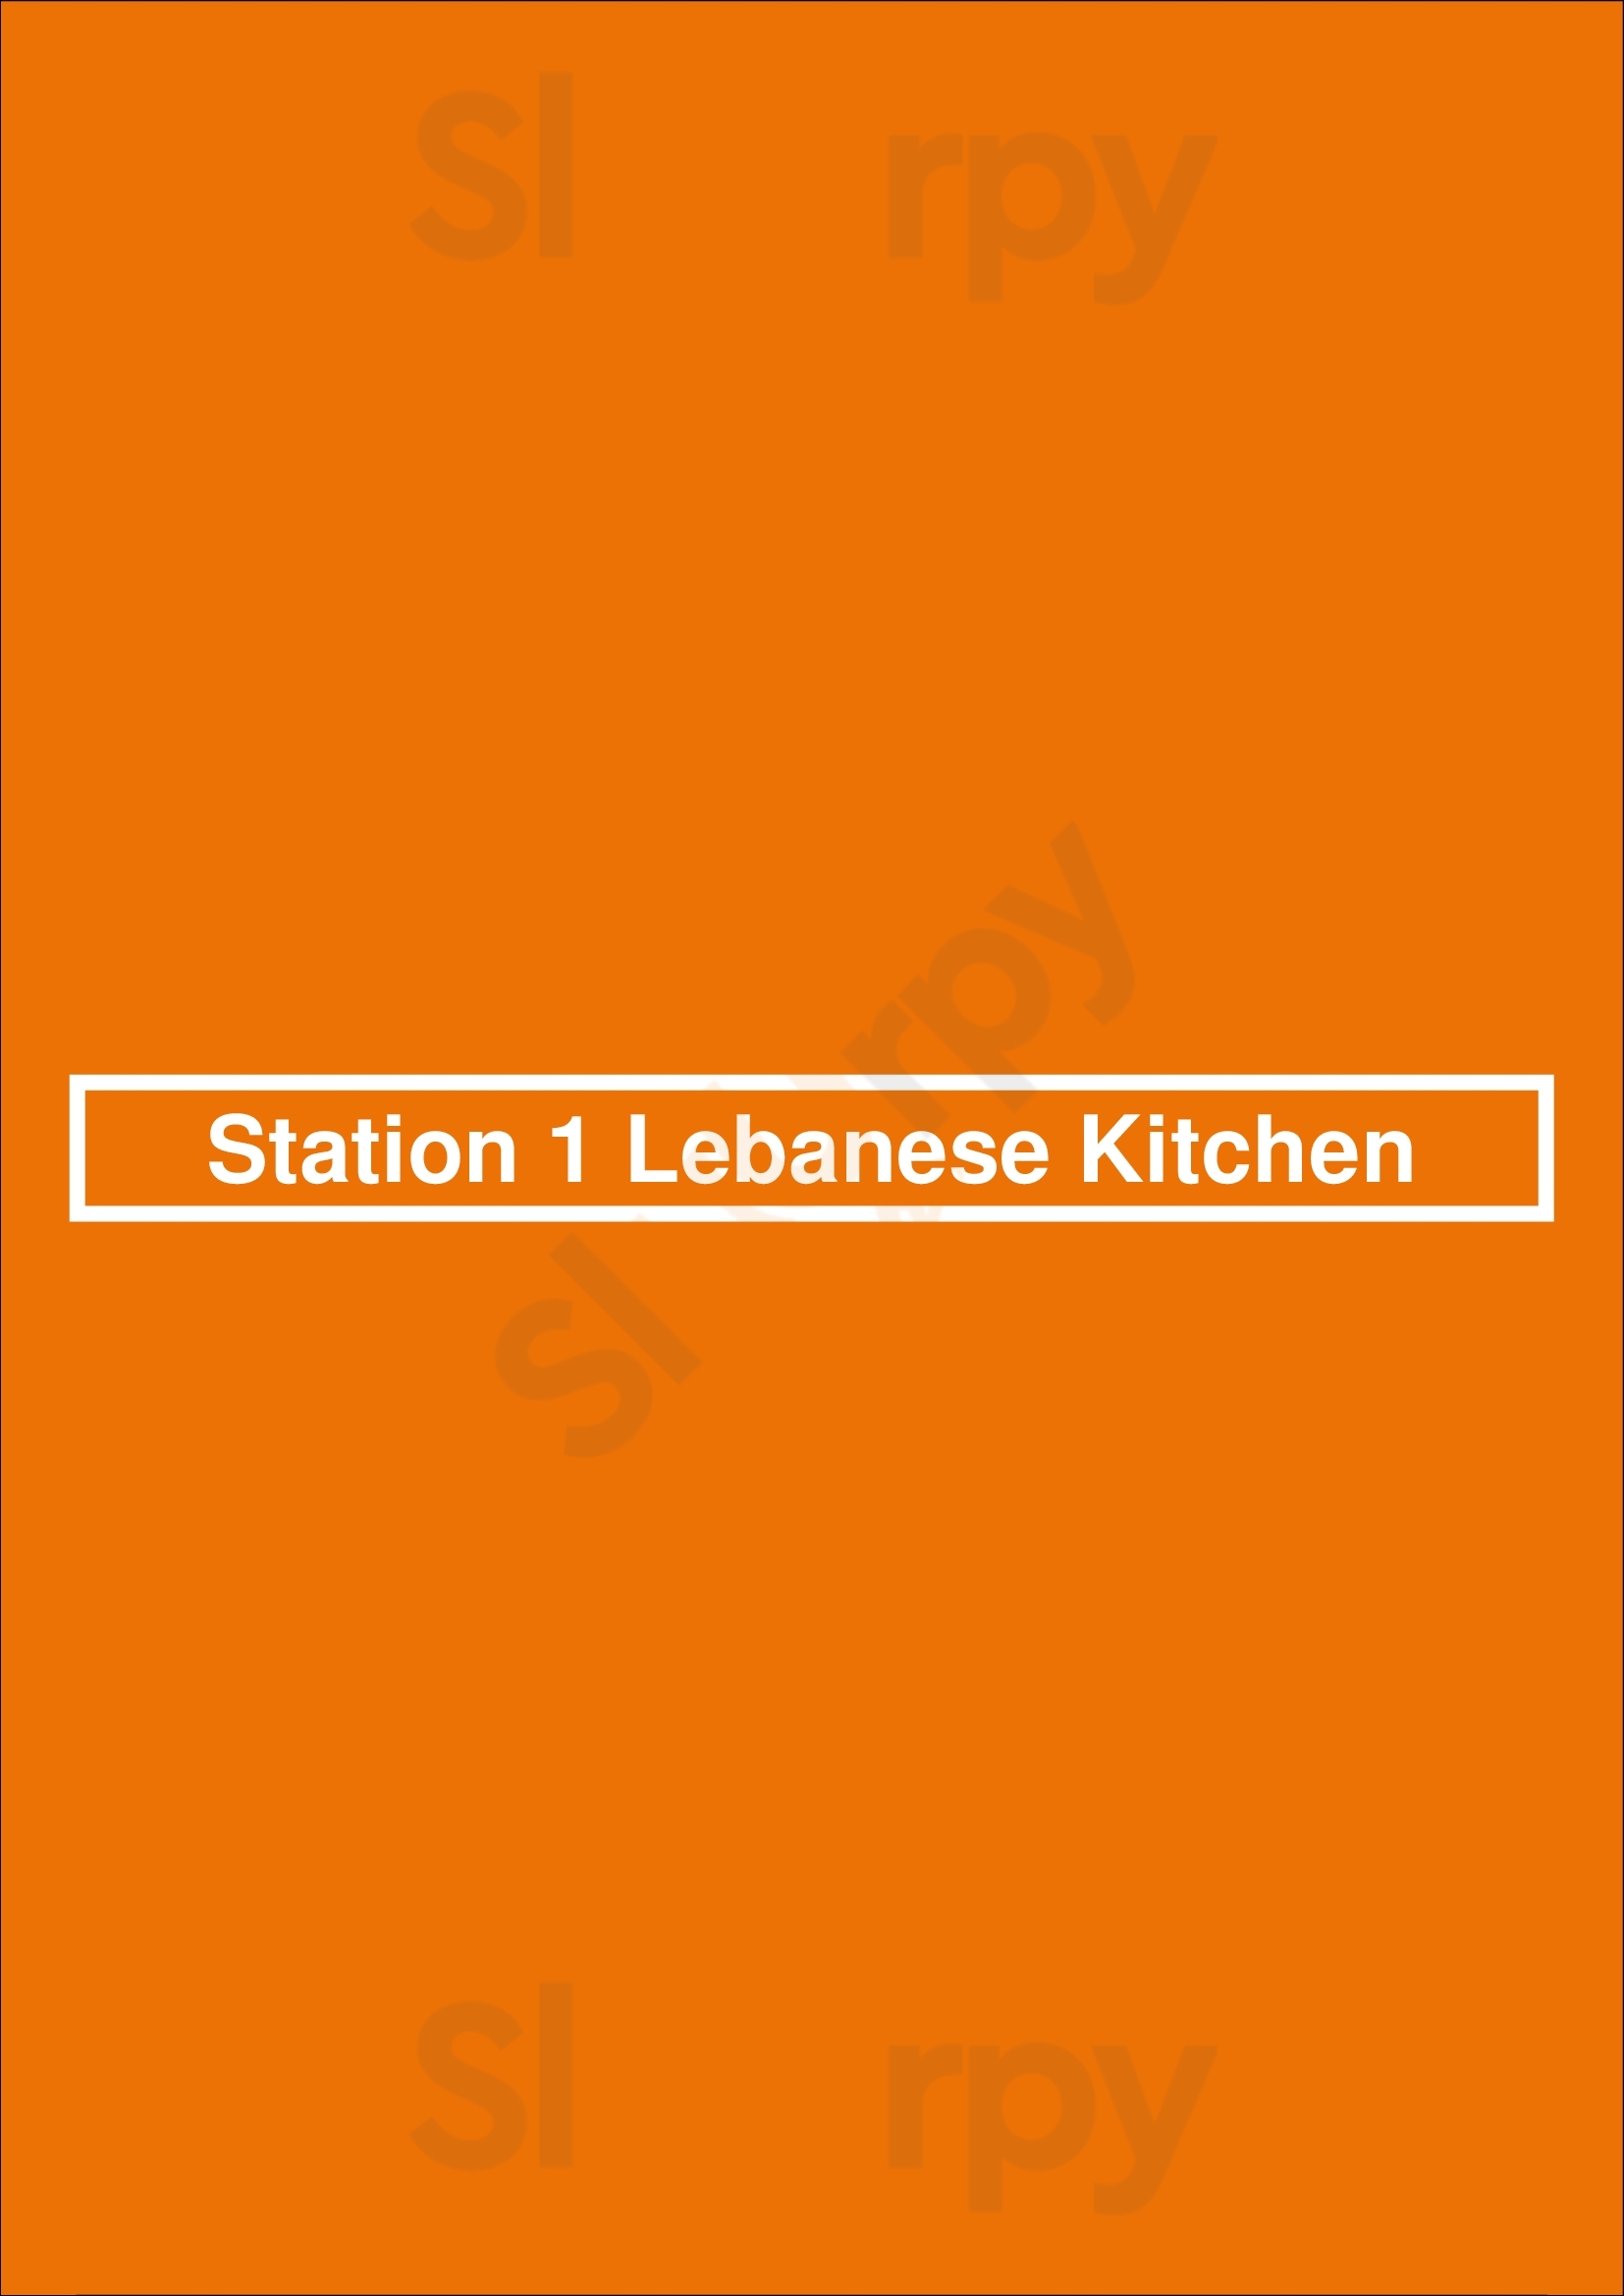 Station 1 Lebanese Kitchen Dartmouth Menu - 1